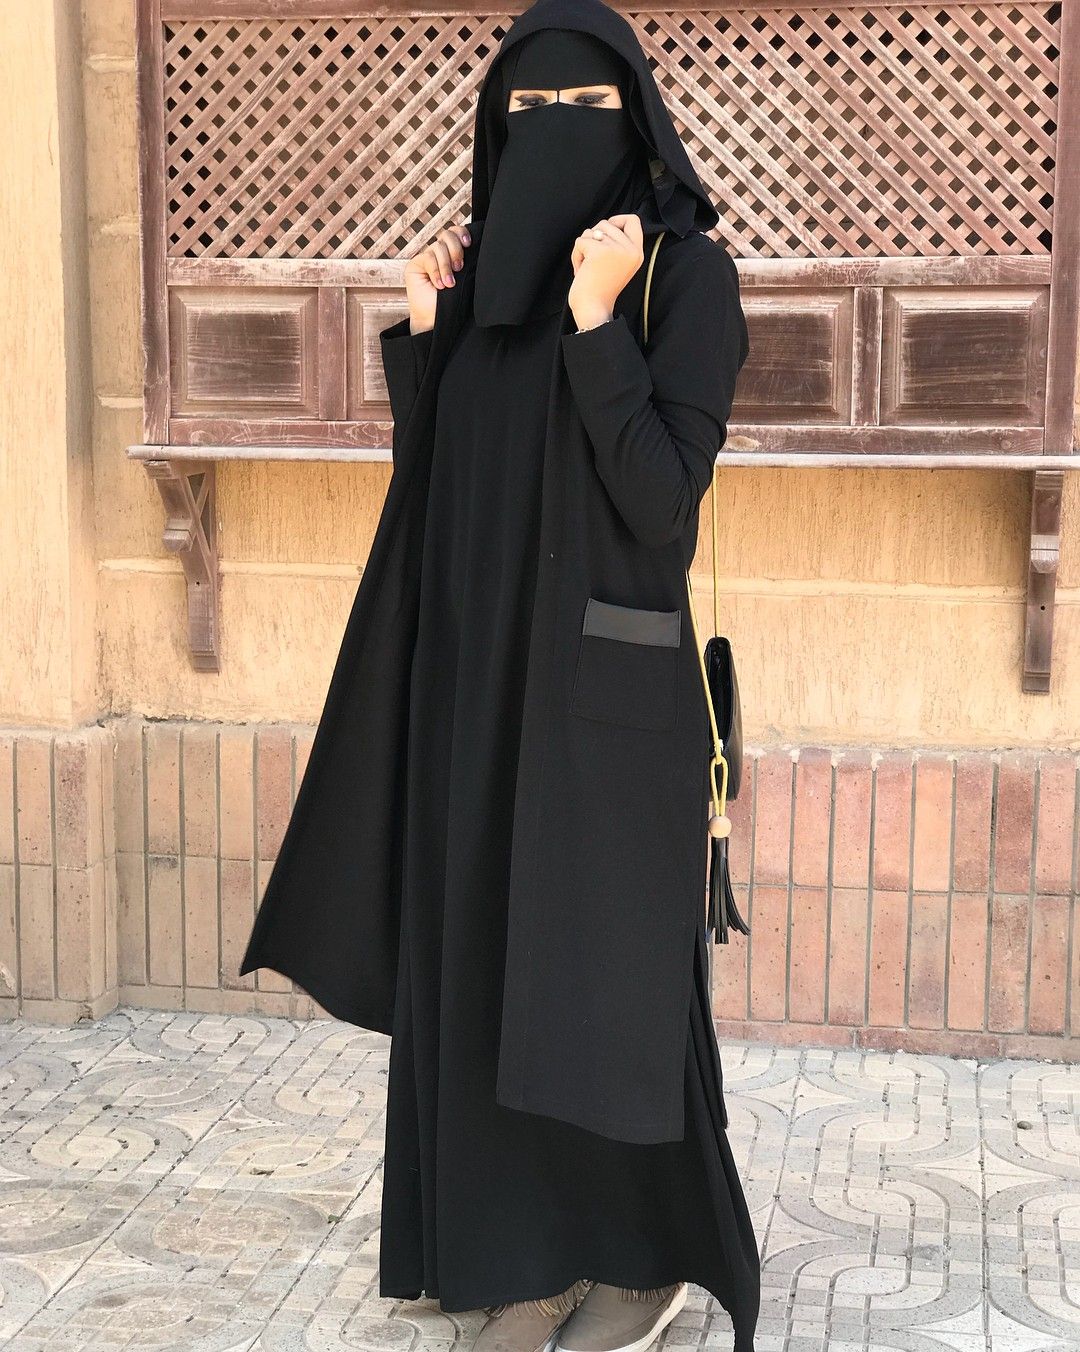 Pin by Alexa June on Sistah | Niqab fashion, Fashion, Beautiful hijab